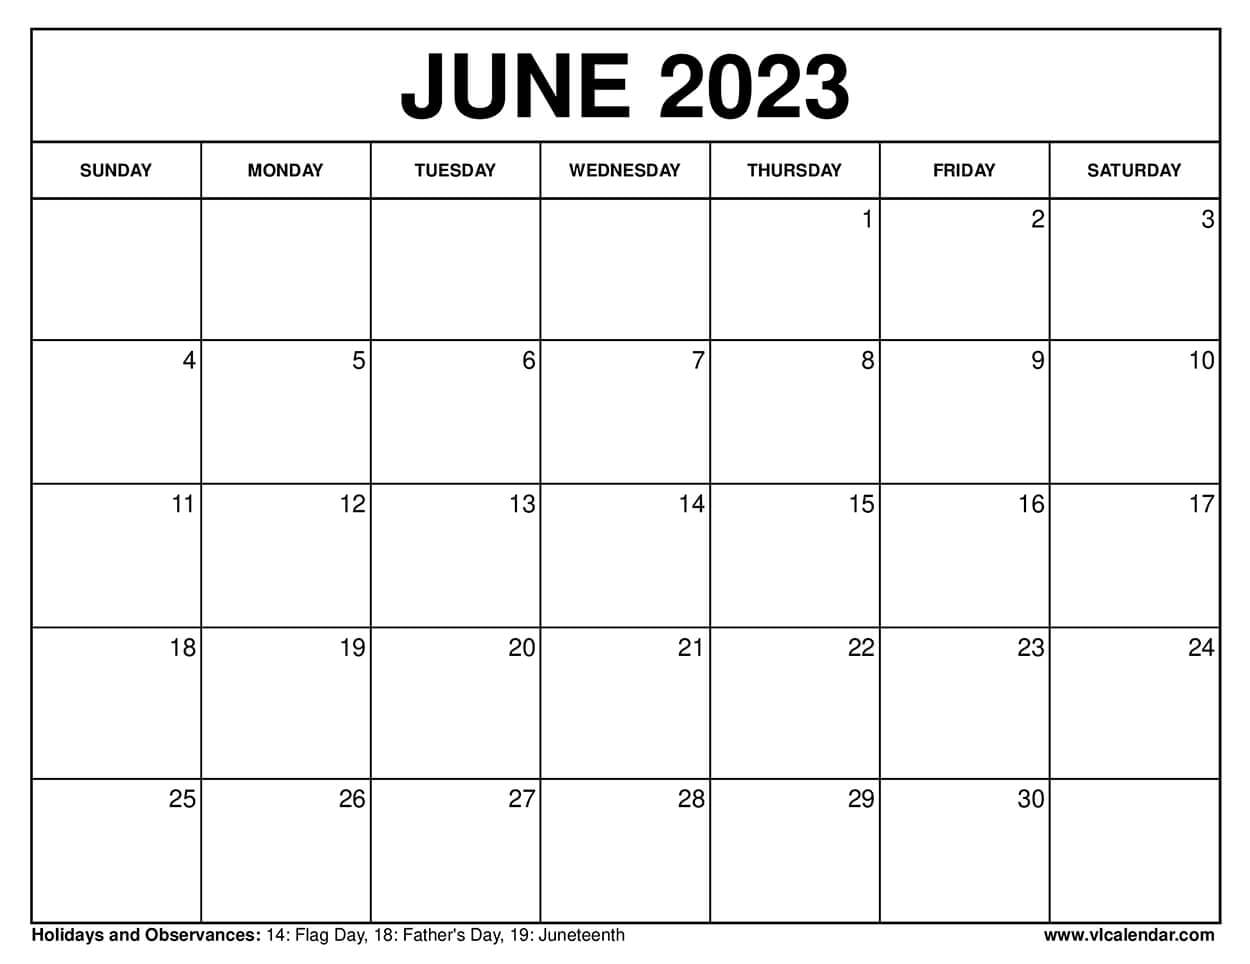 June 2023 Calendar